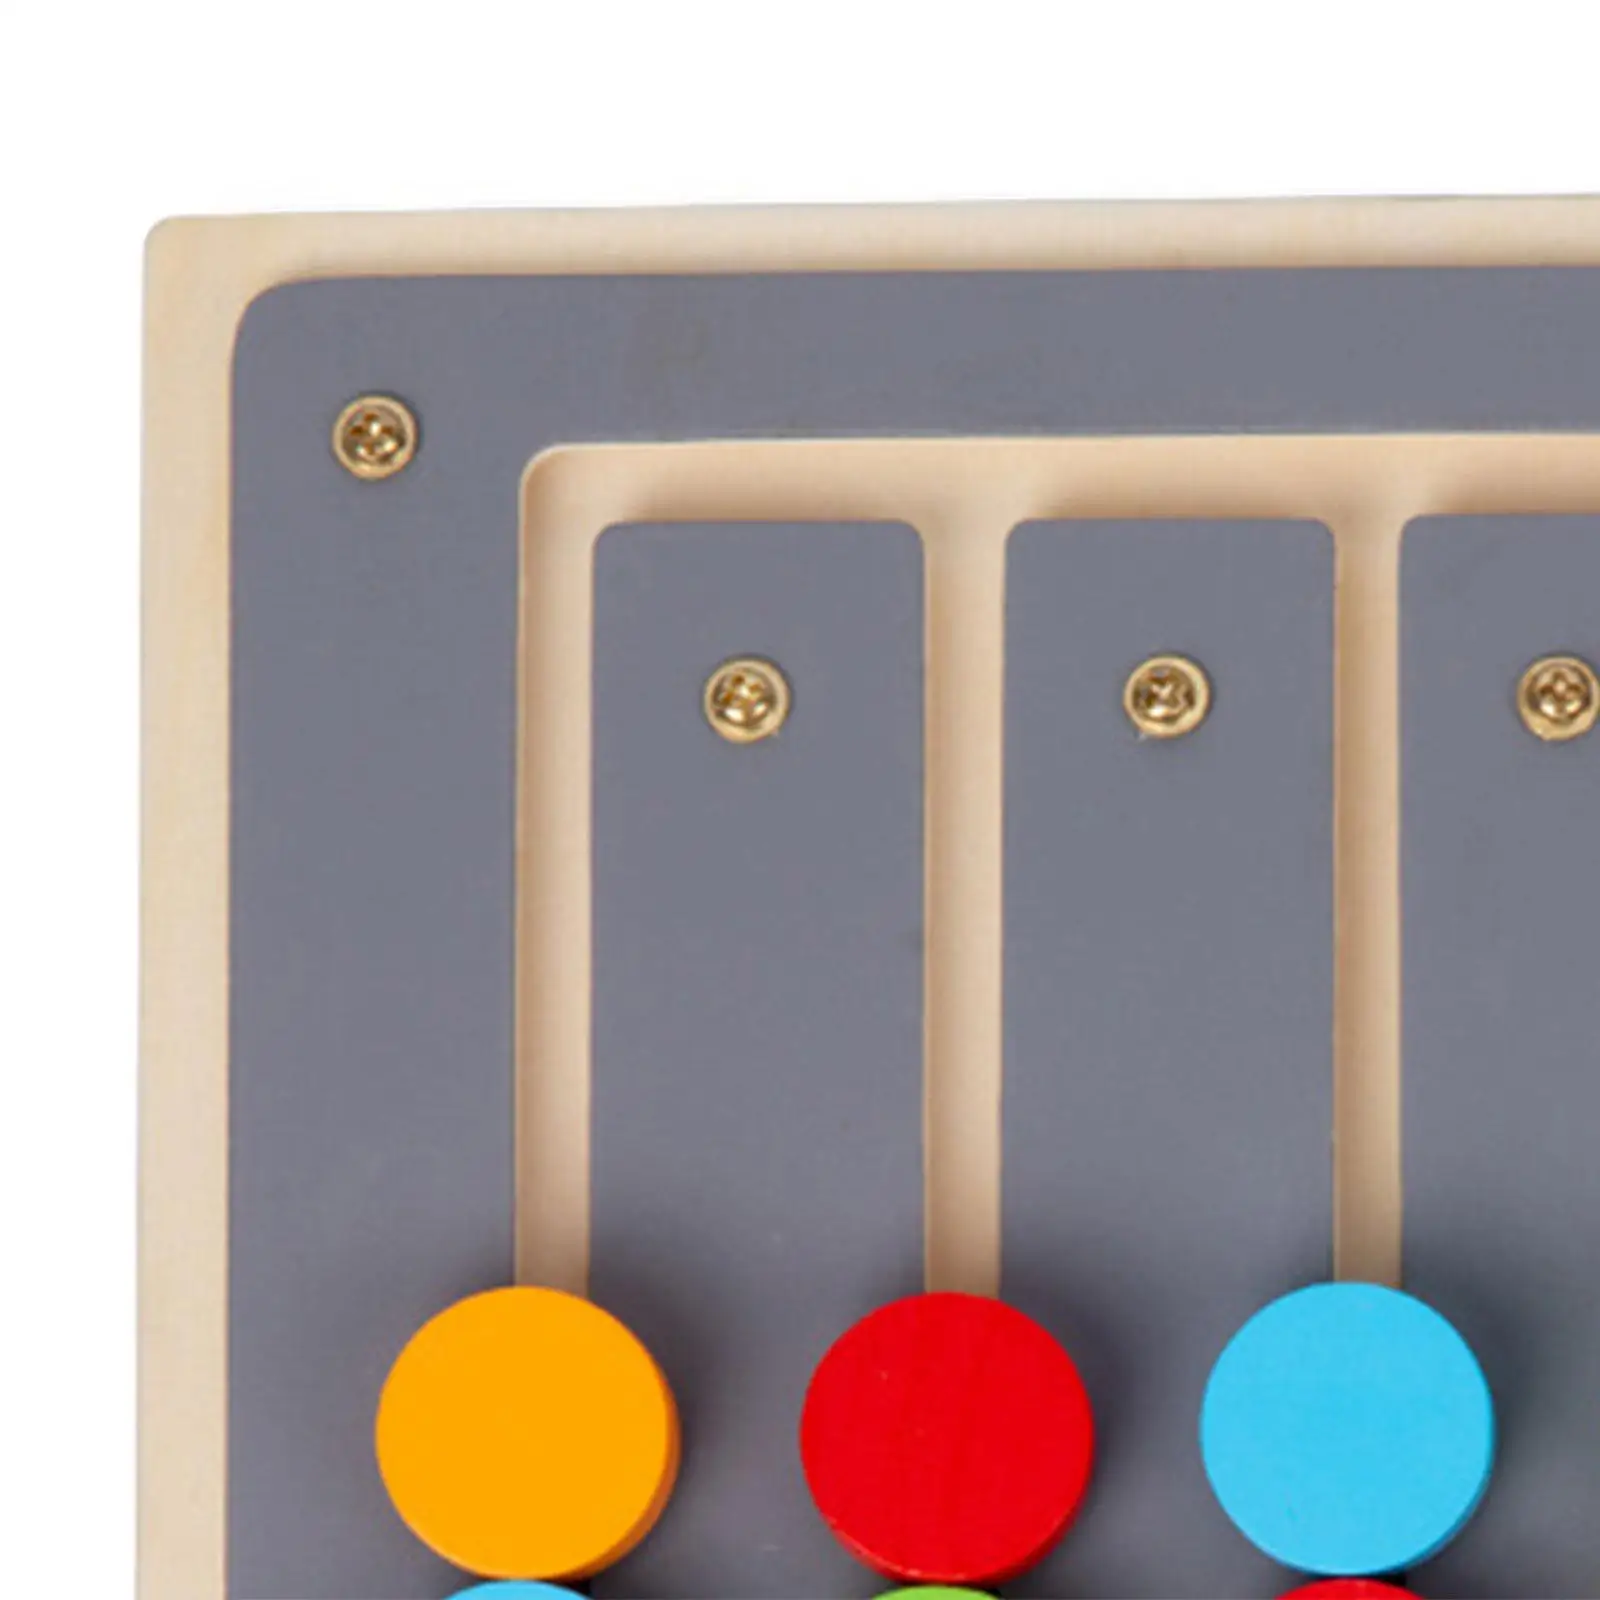 Sliding Color Puzzle Development Toys Funny Montessori for Kids Preschool Gifts